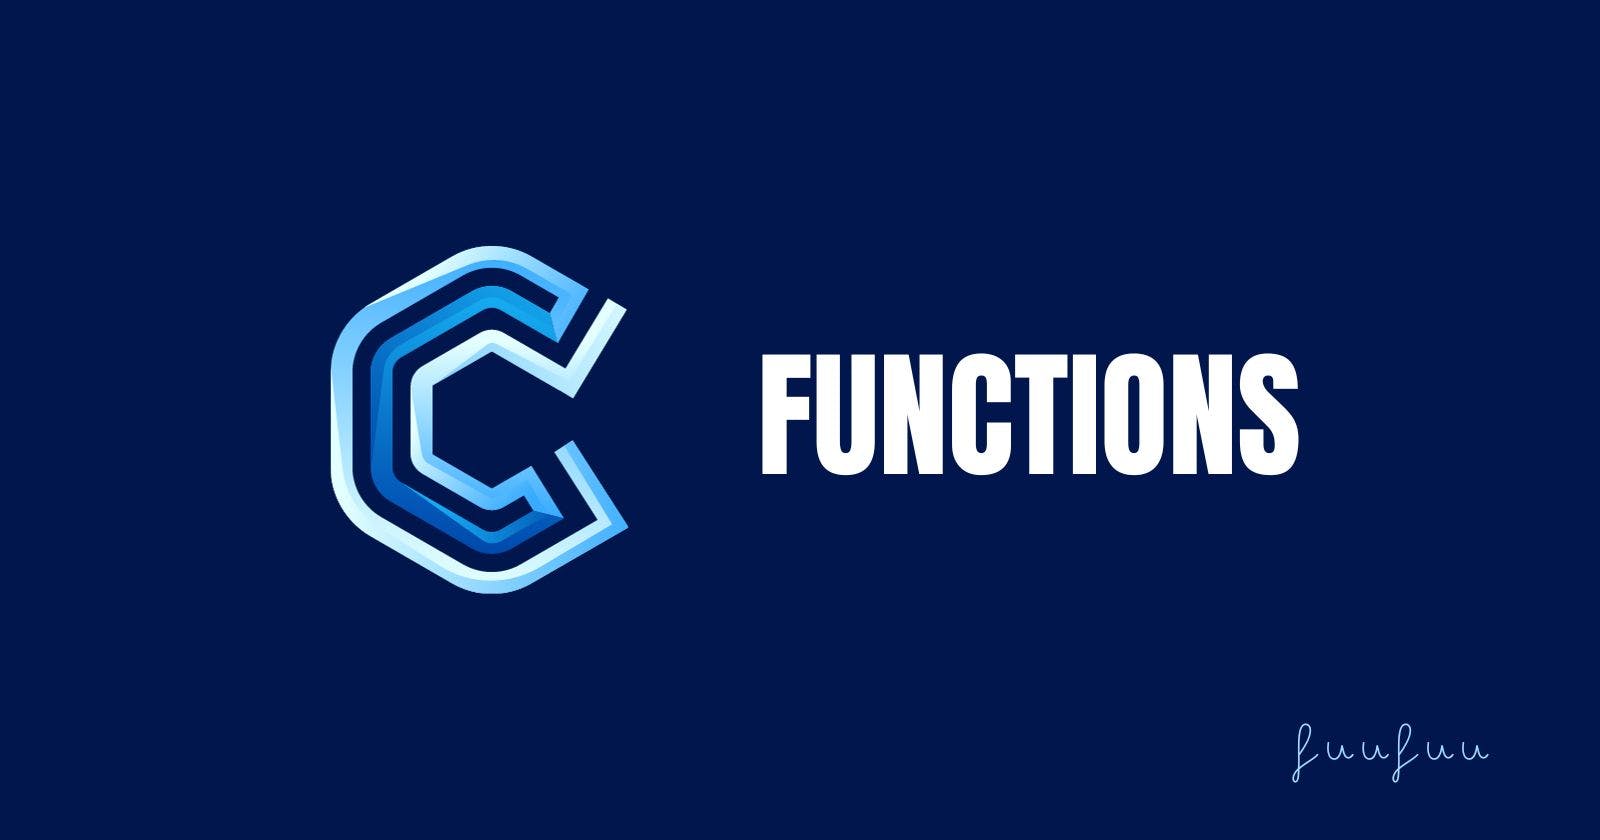 C - Functions